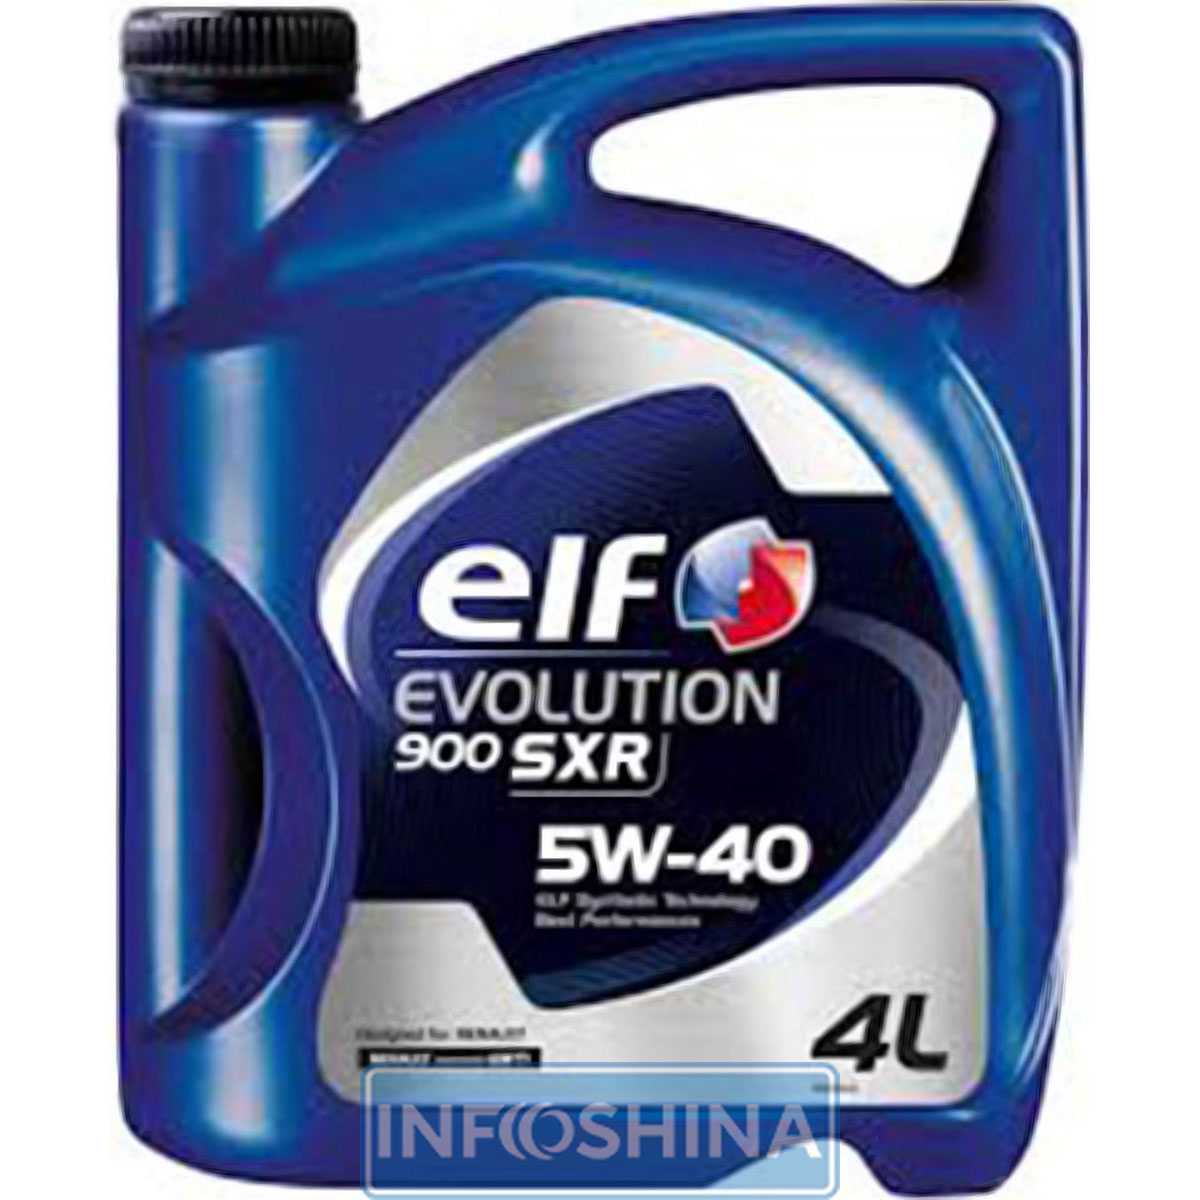 ELF Evolution 900 SXR 5W-40